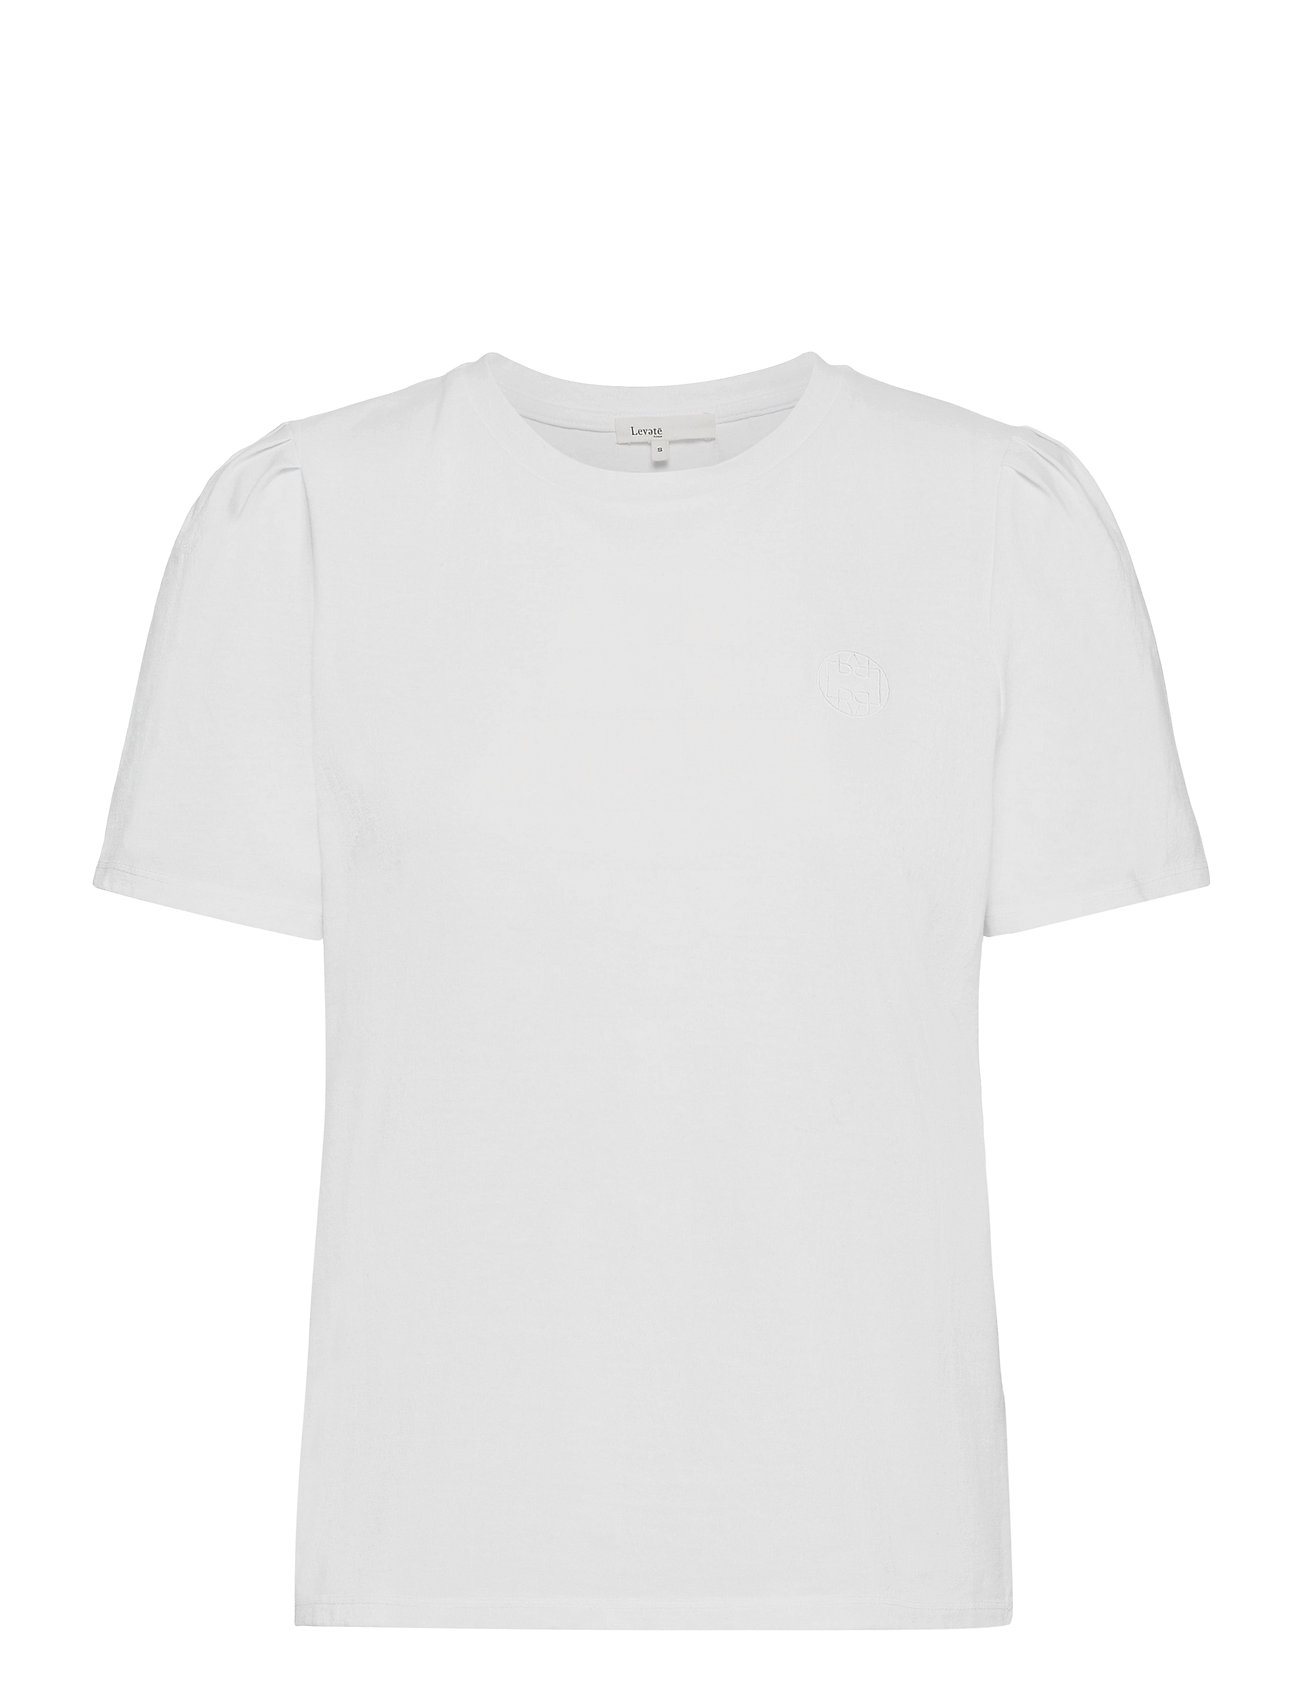 Lr-Isol Tops T-shirts & Tops Short-sleeved White Levete Room